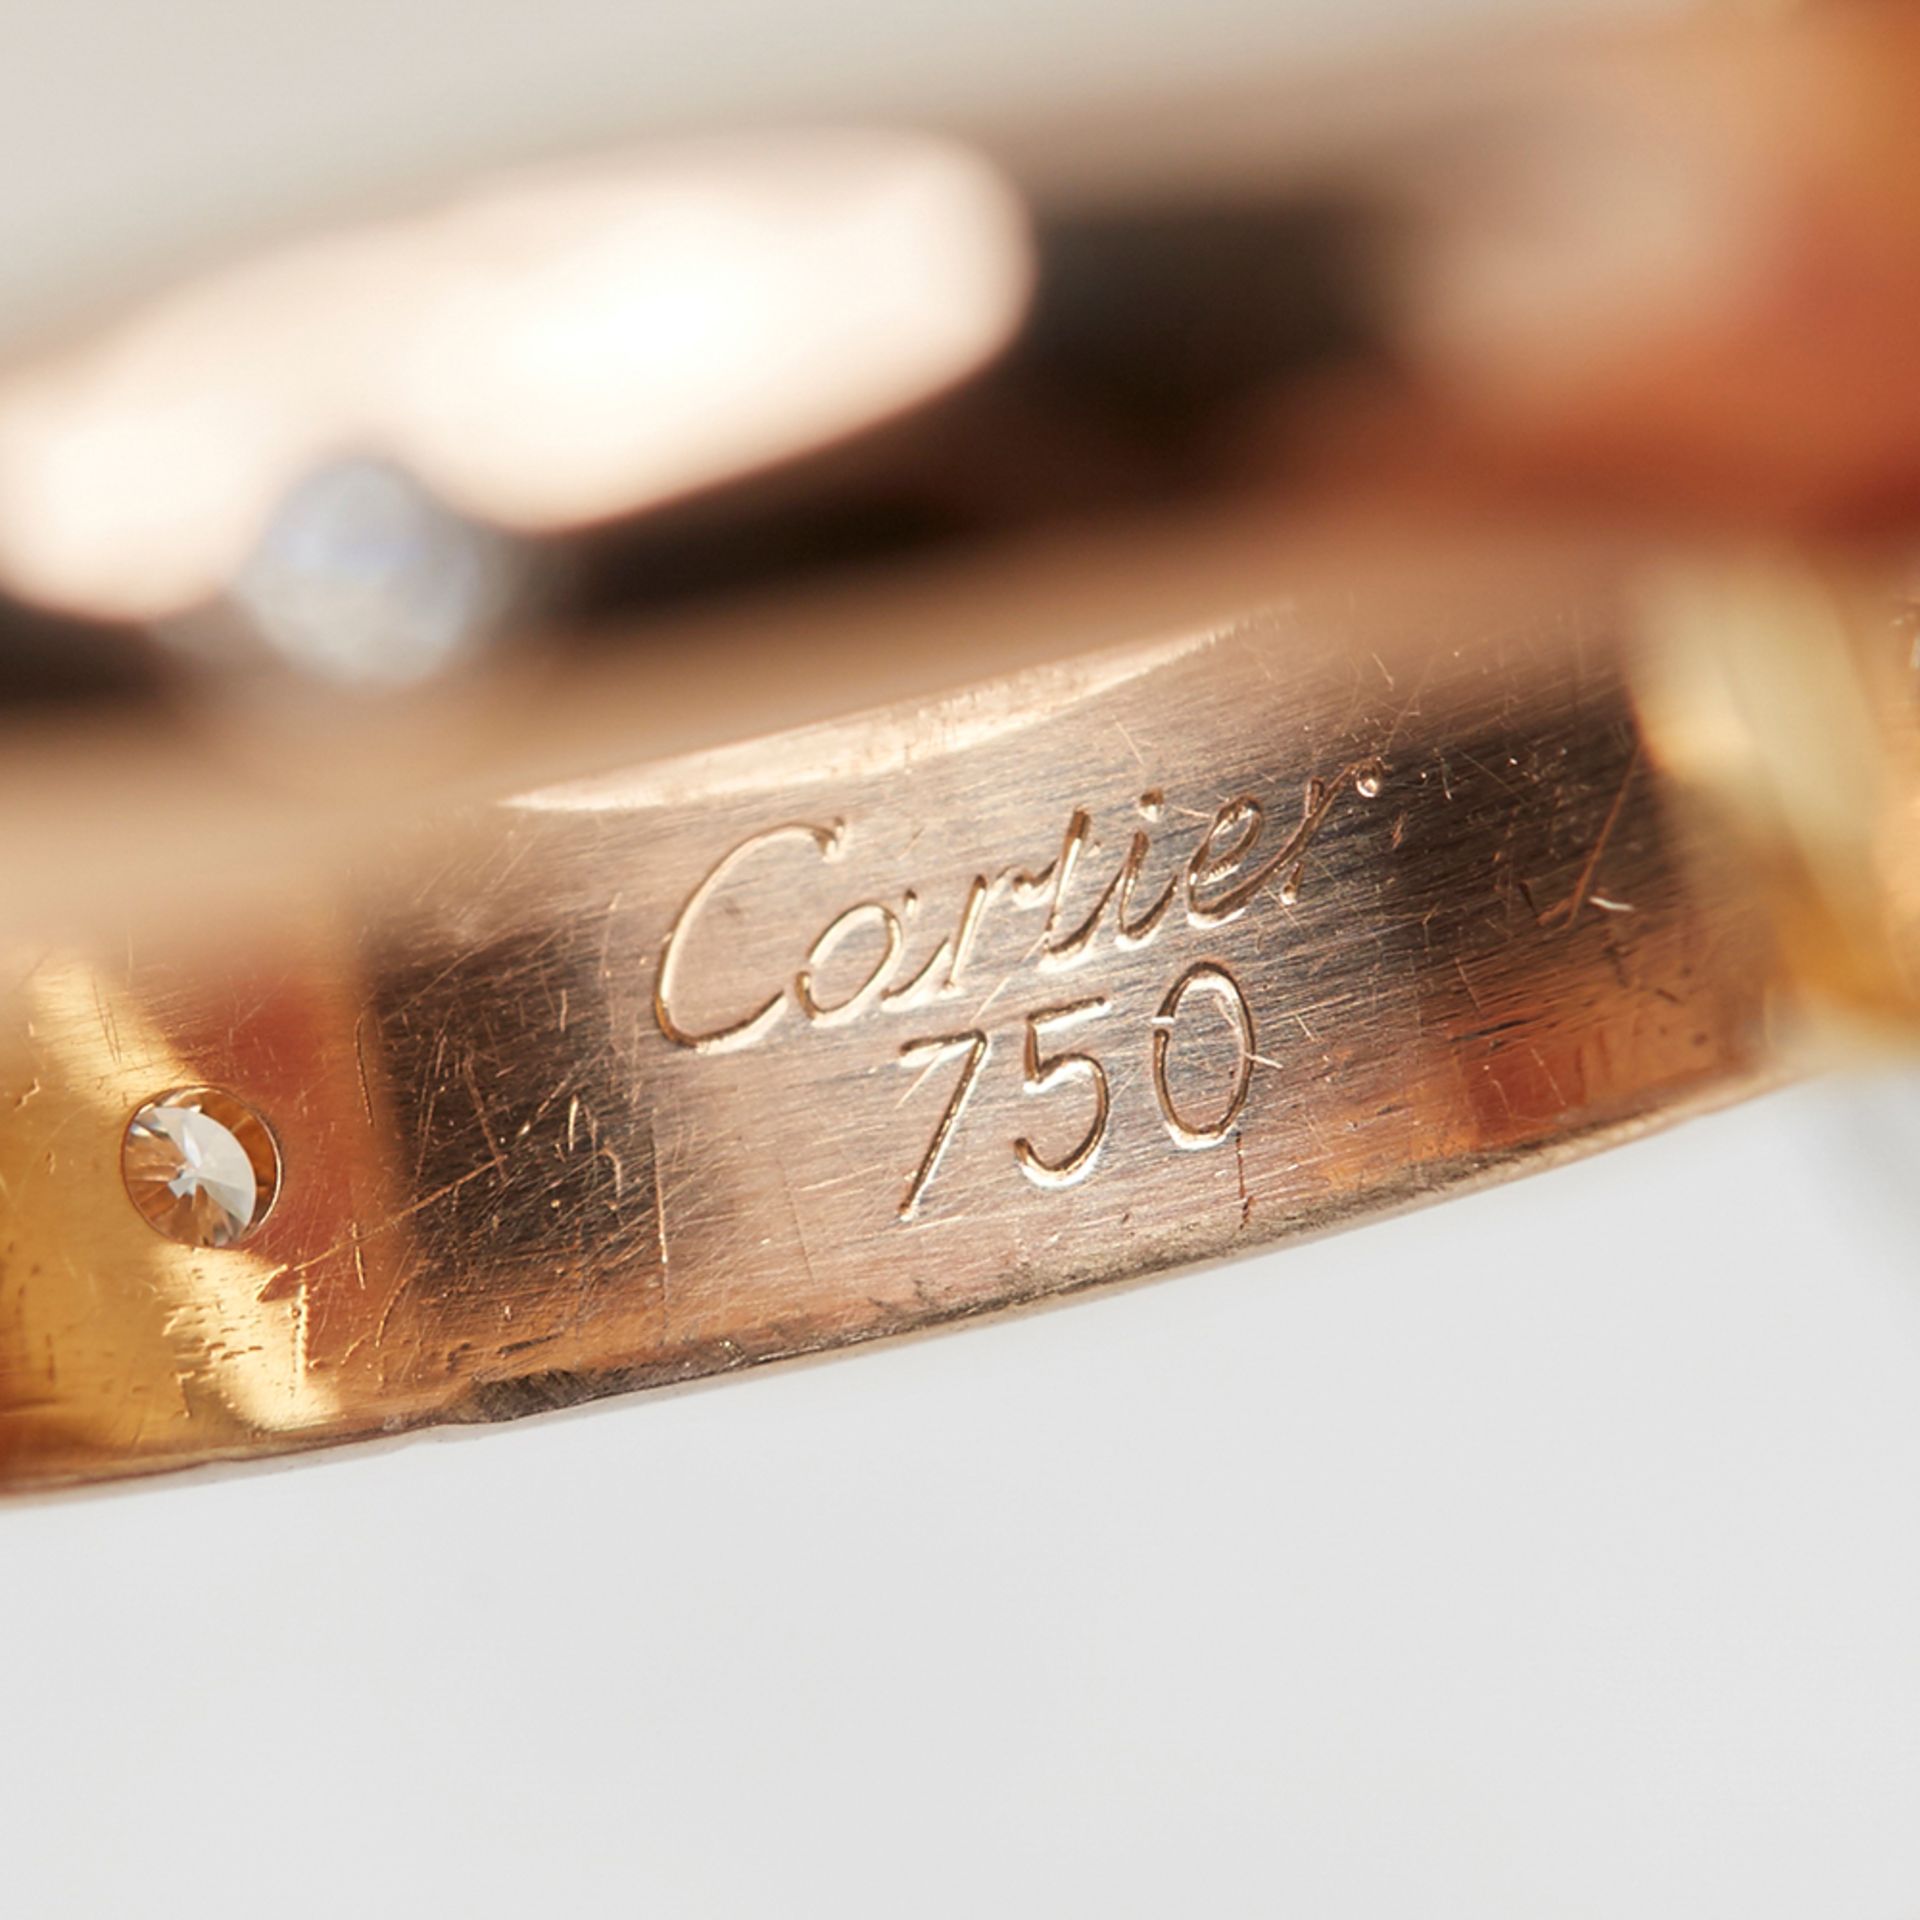 Cartier 18k Yellow, White & Rose Gold Diamond Trinity Ring - Image 5 of 8